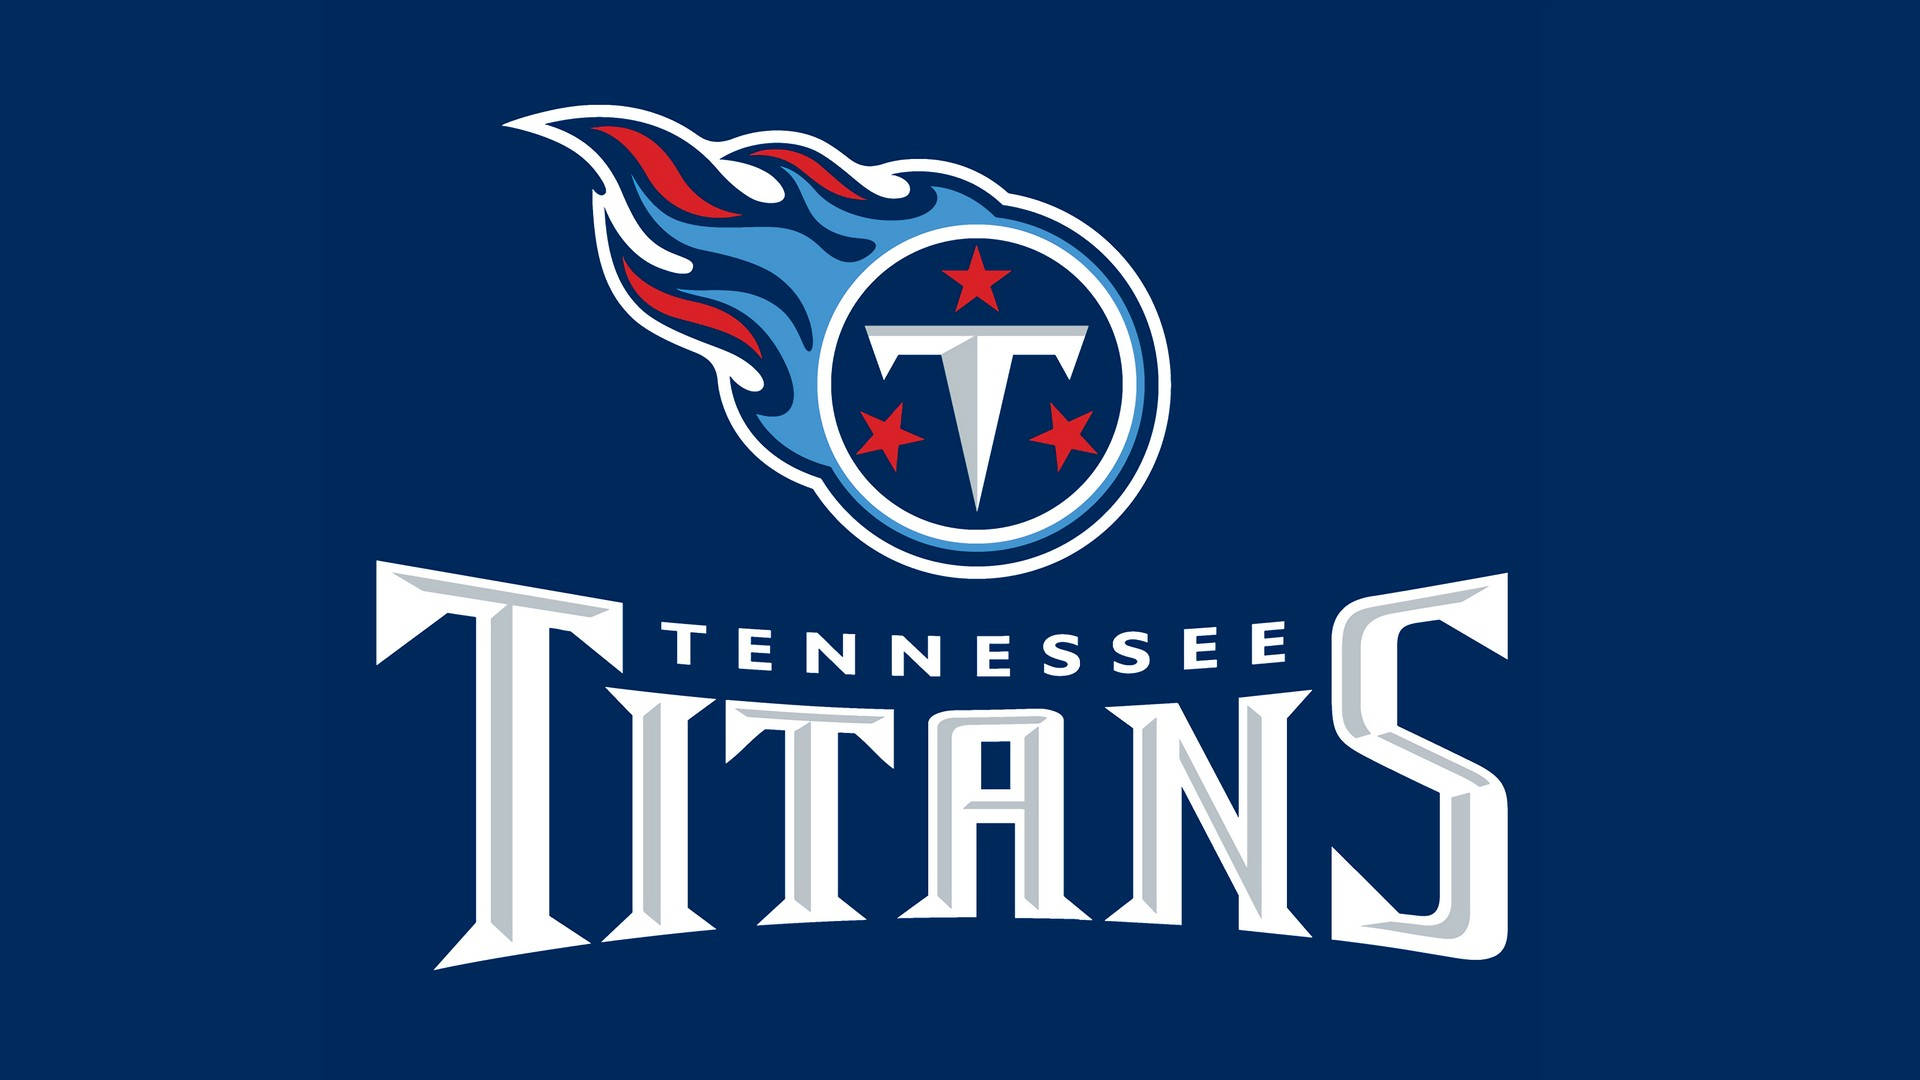 Imágenes De Tennessee Titans